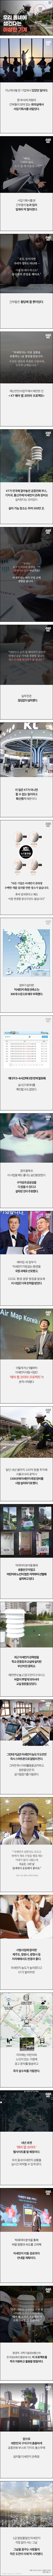 KT가 최근에 한 잘한 일(feat. 미세먼지) | 인스티즈